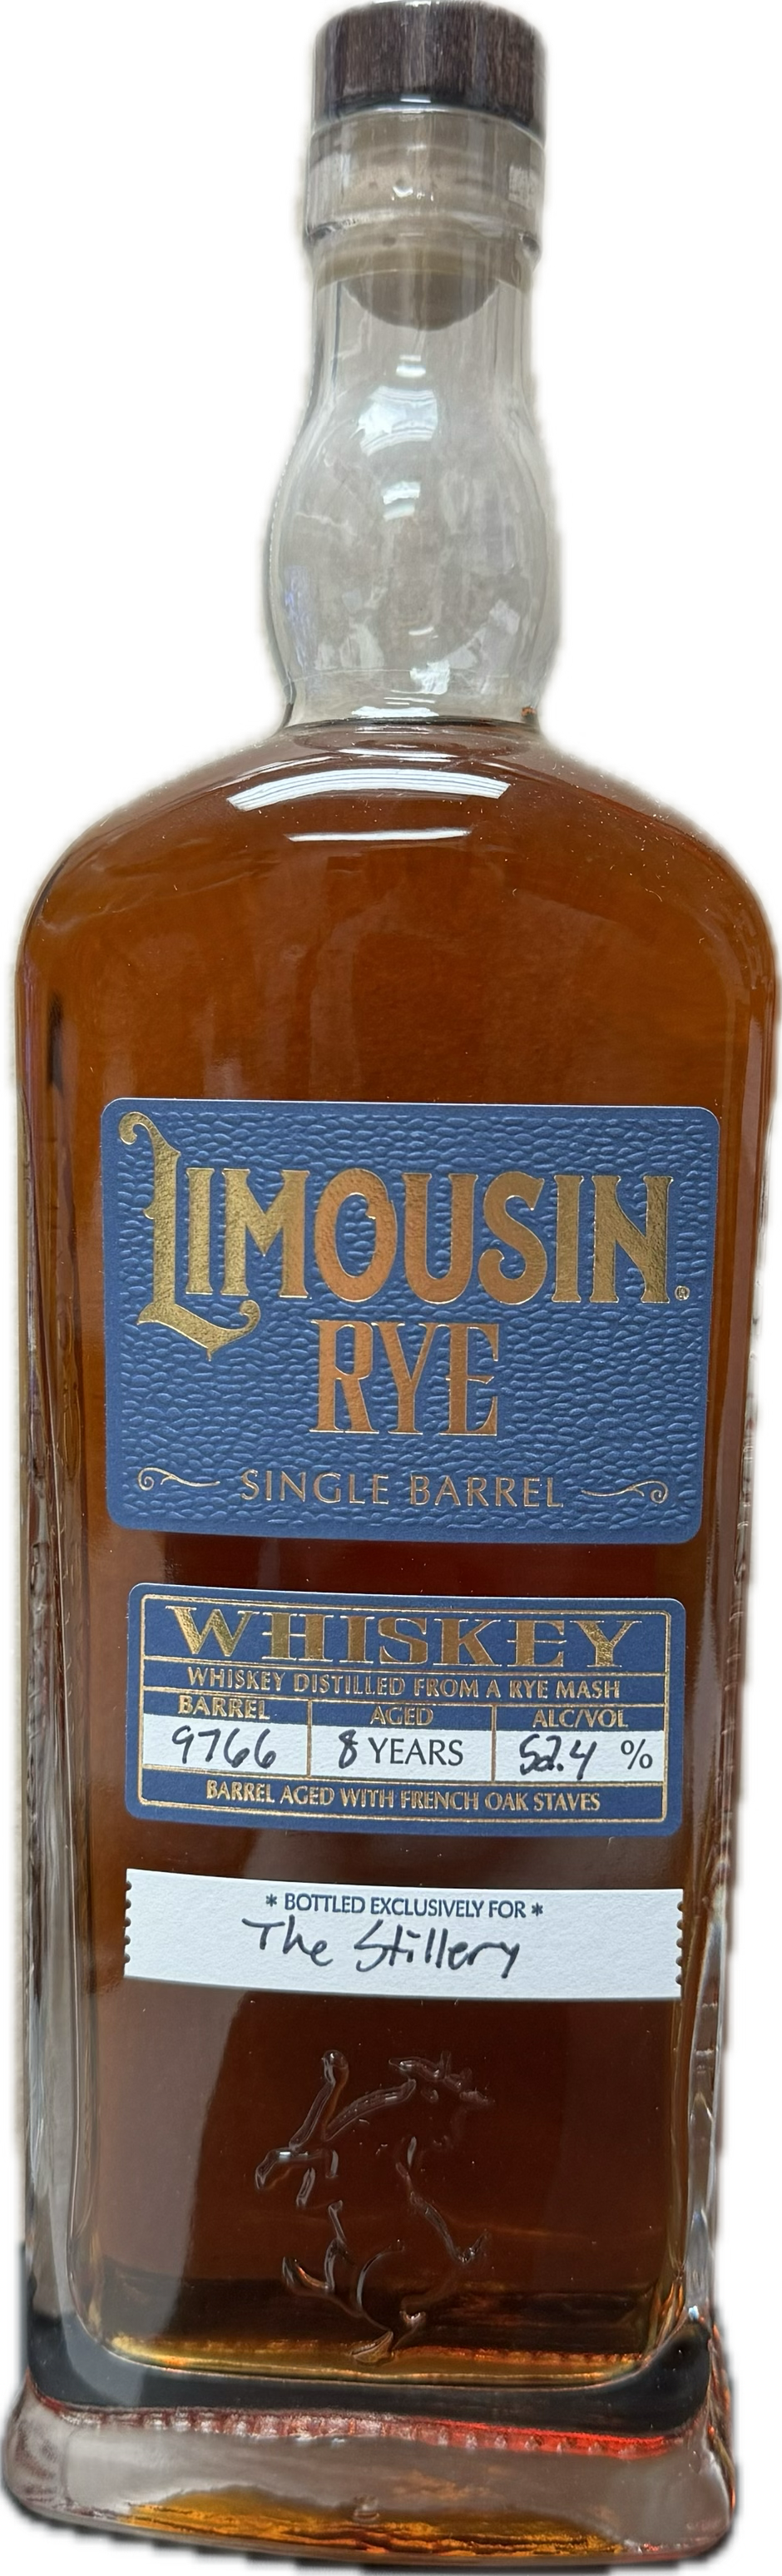 Limousin Rye Honey Barrel Release